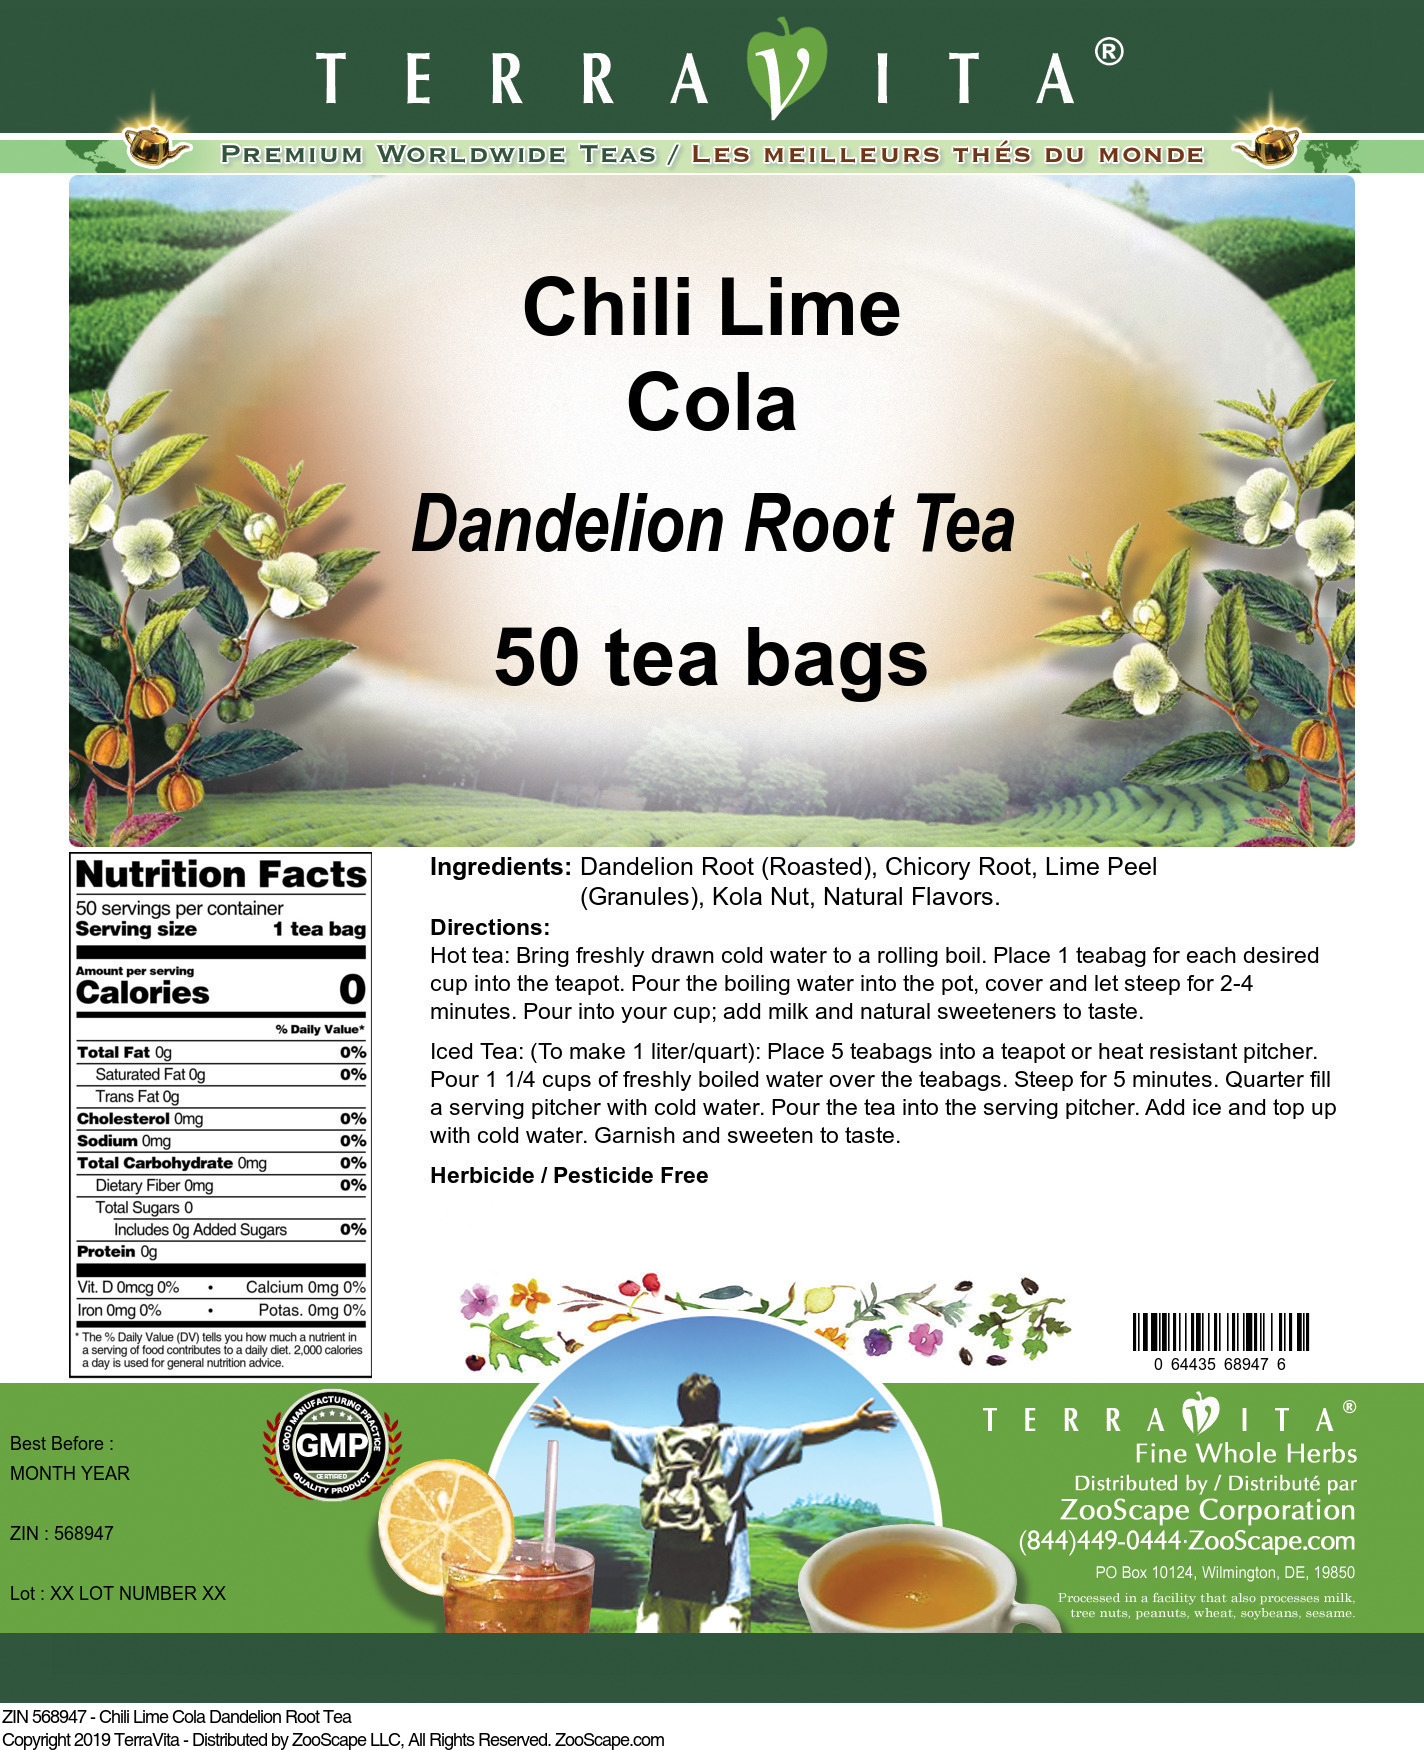 Chili Lime Cola Dandelion Root Tea - Label